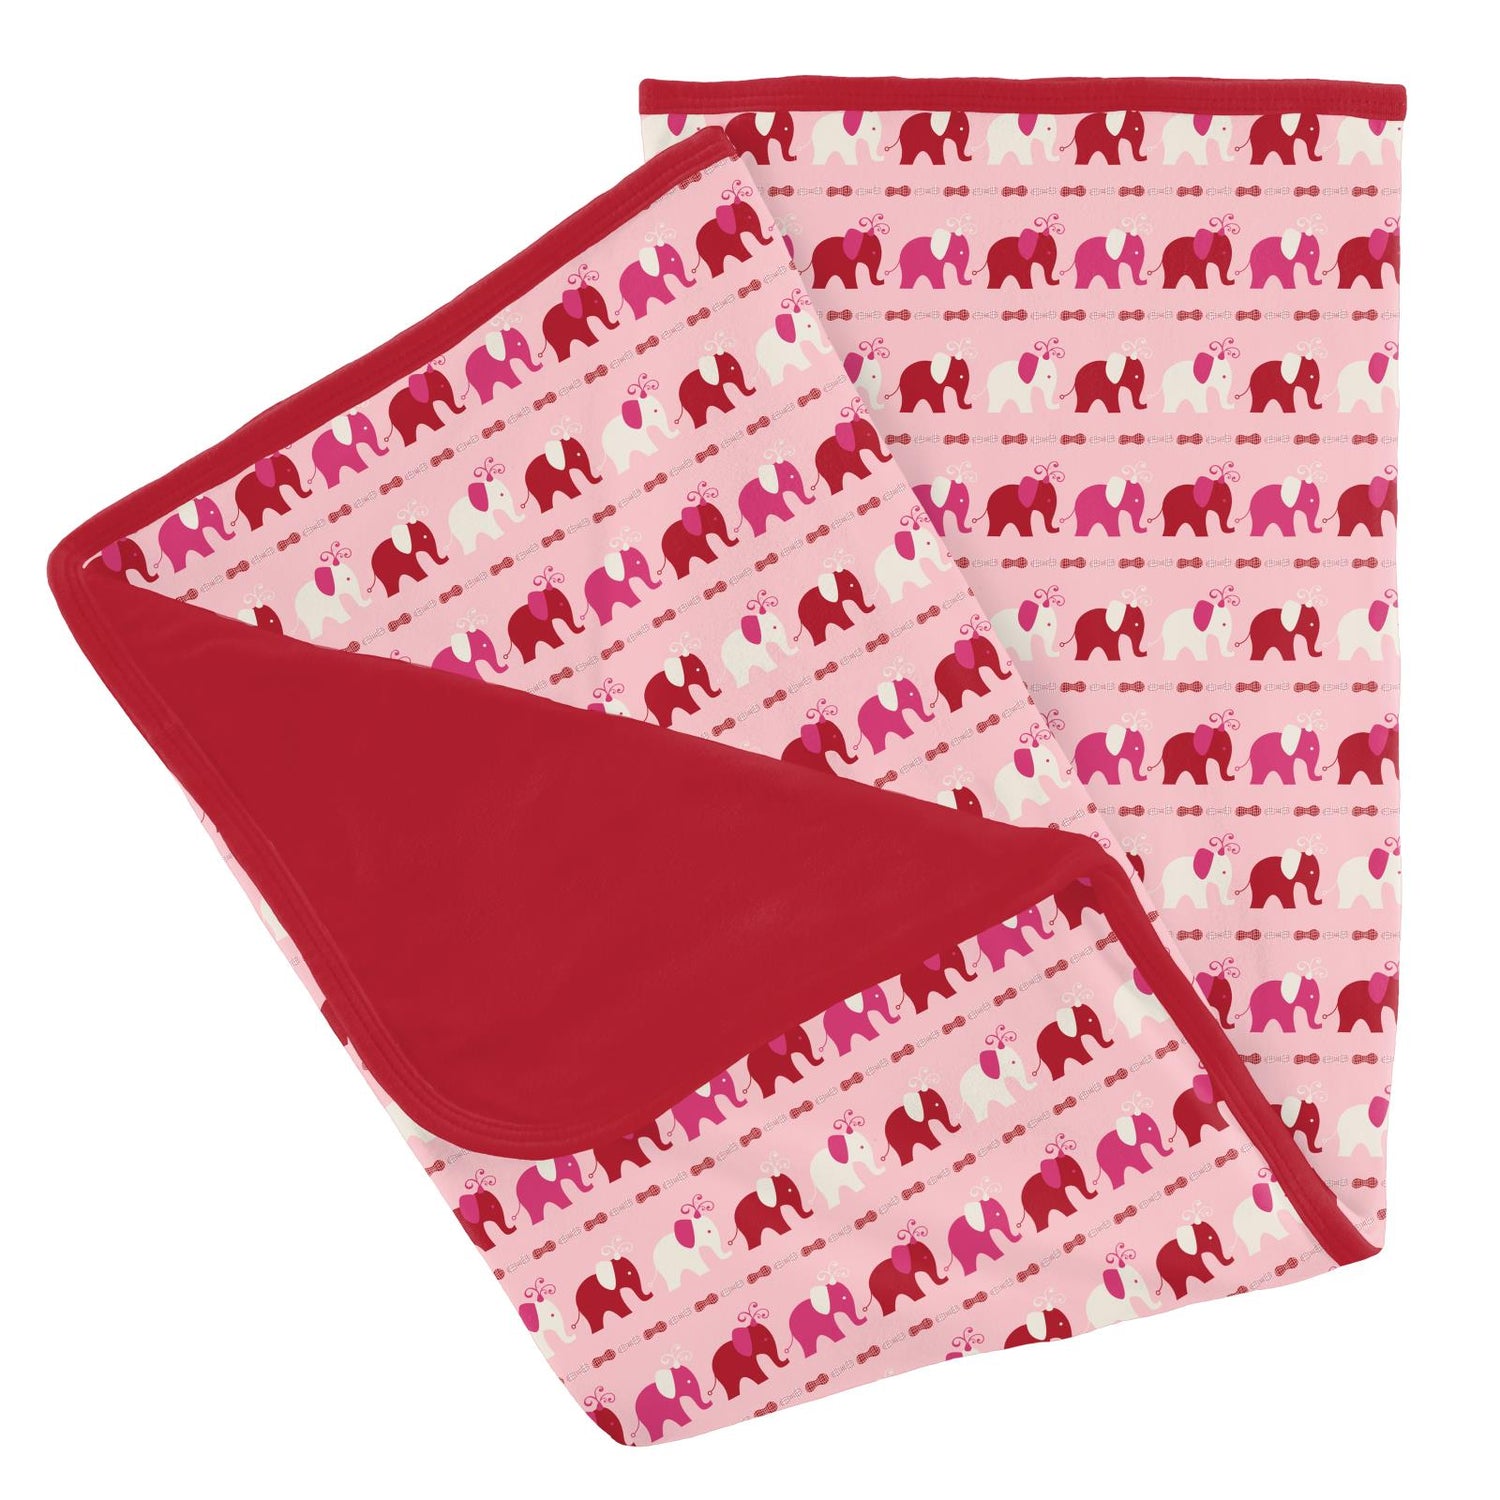 Print Stroller Blanket in Calypso Elephant